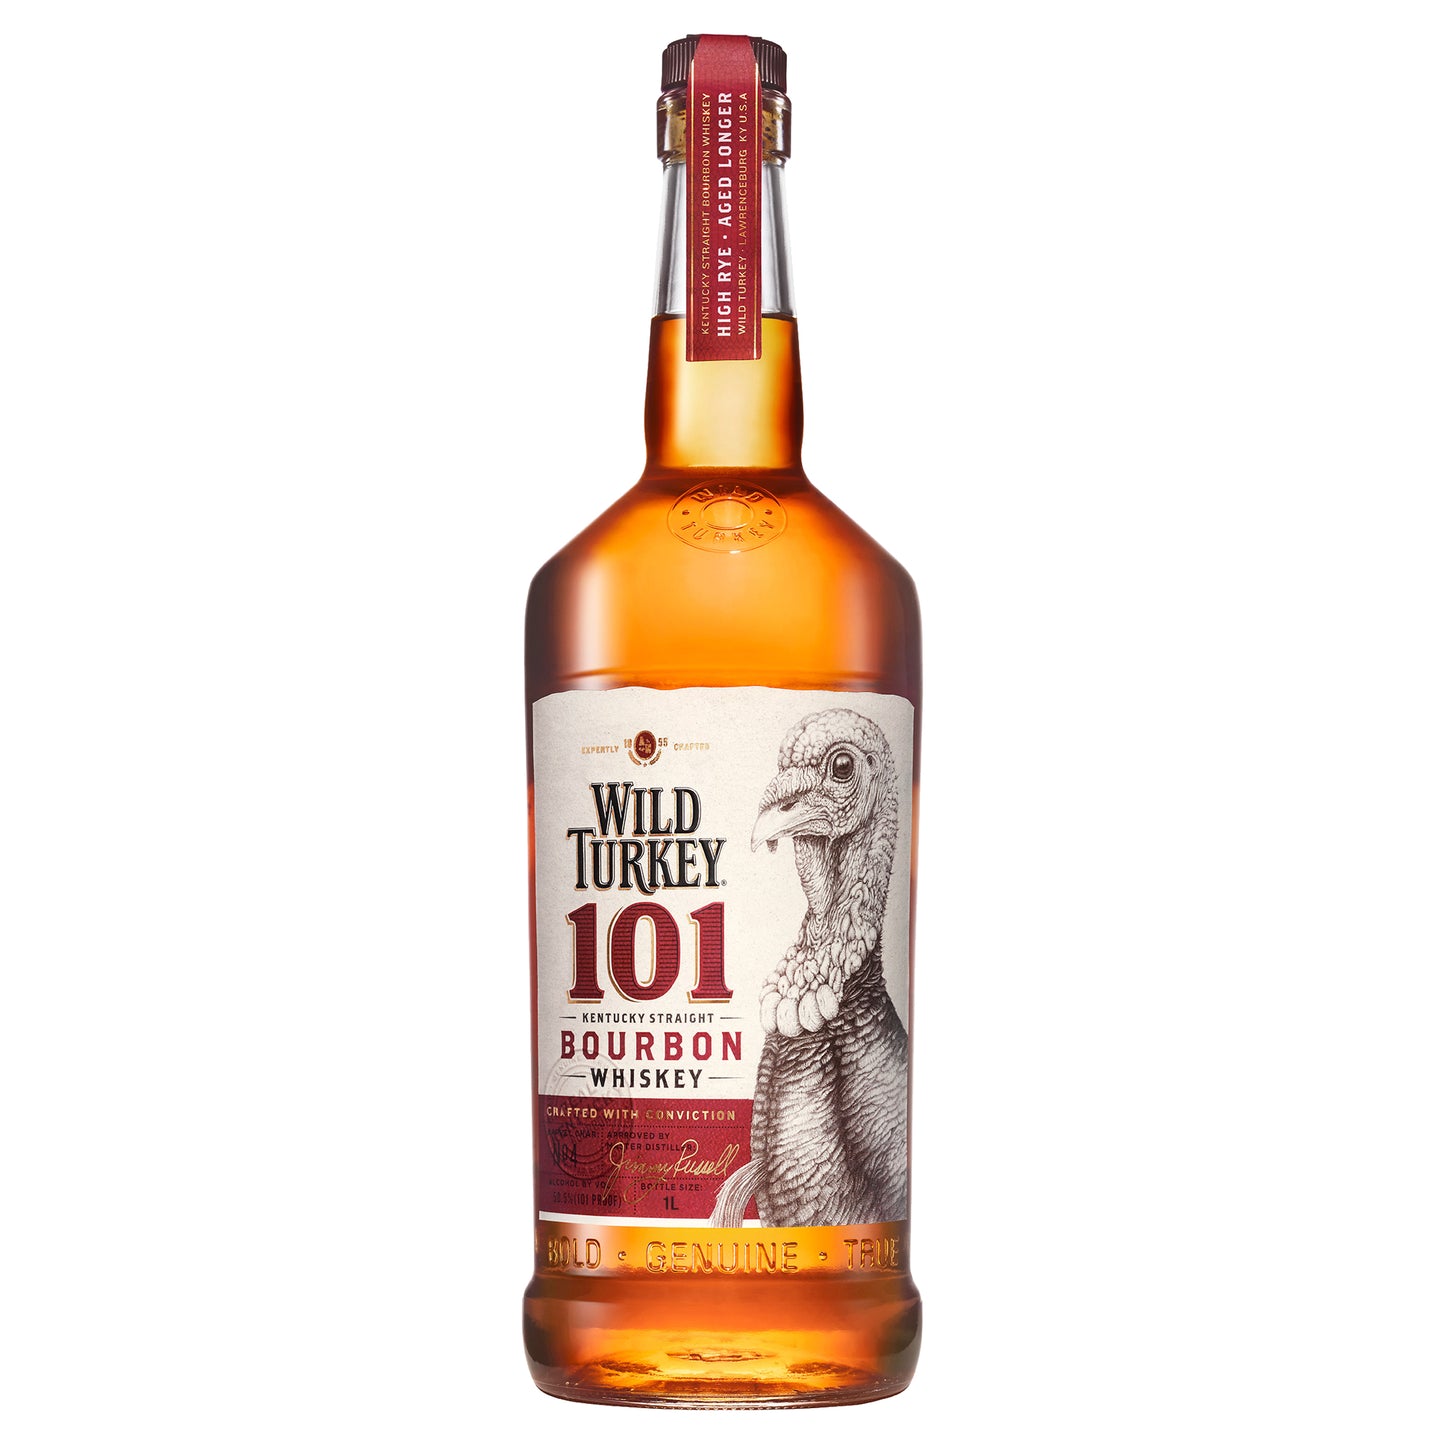 Wild Turkey Bourbon Whiskey 101